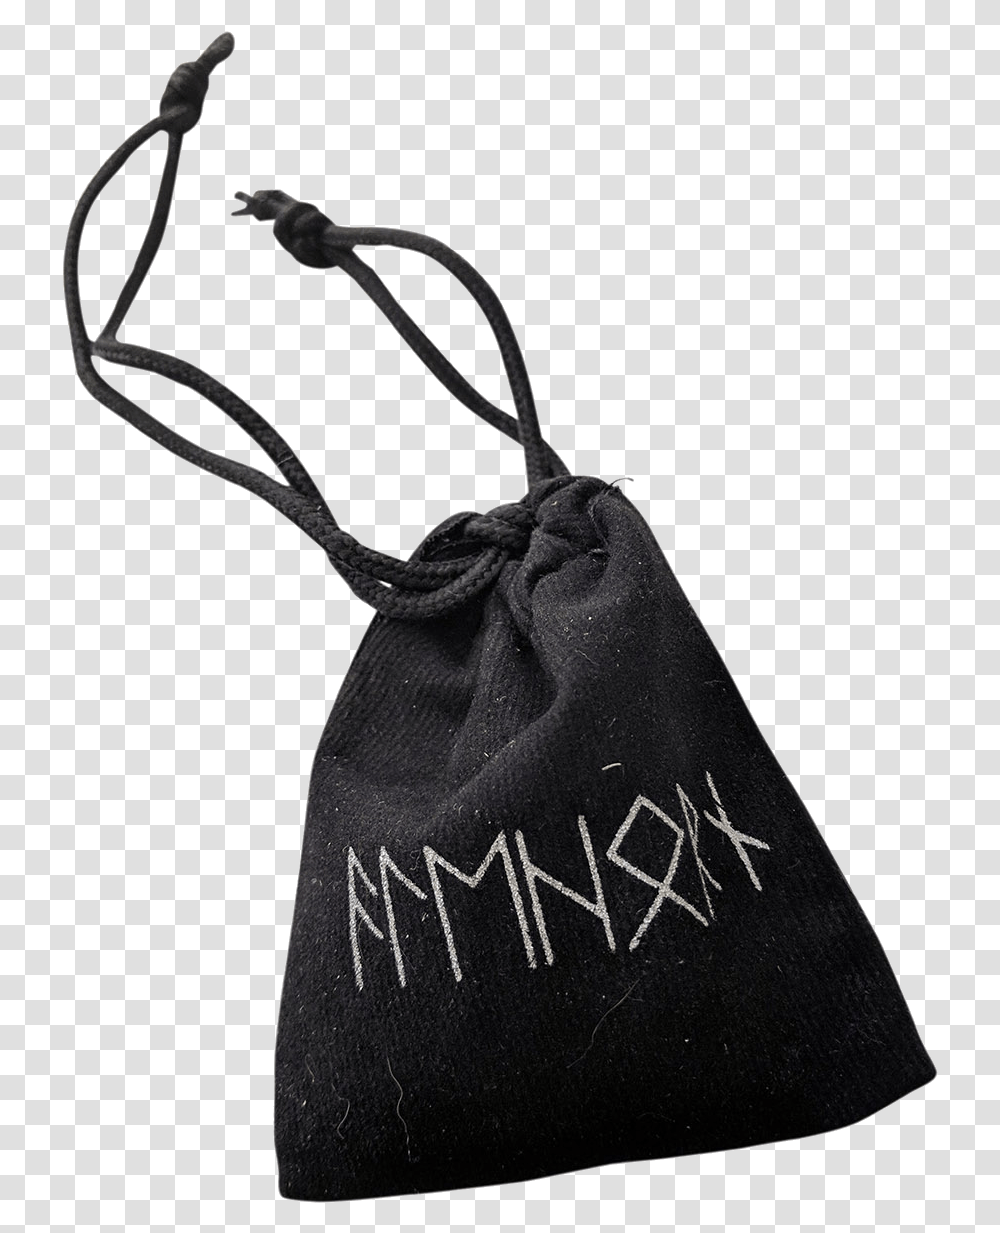 Shoulder Bag Clipart Download Mjolnir Bag, Sack, Accessories, Accessory, Purse Transparent Png